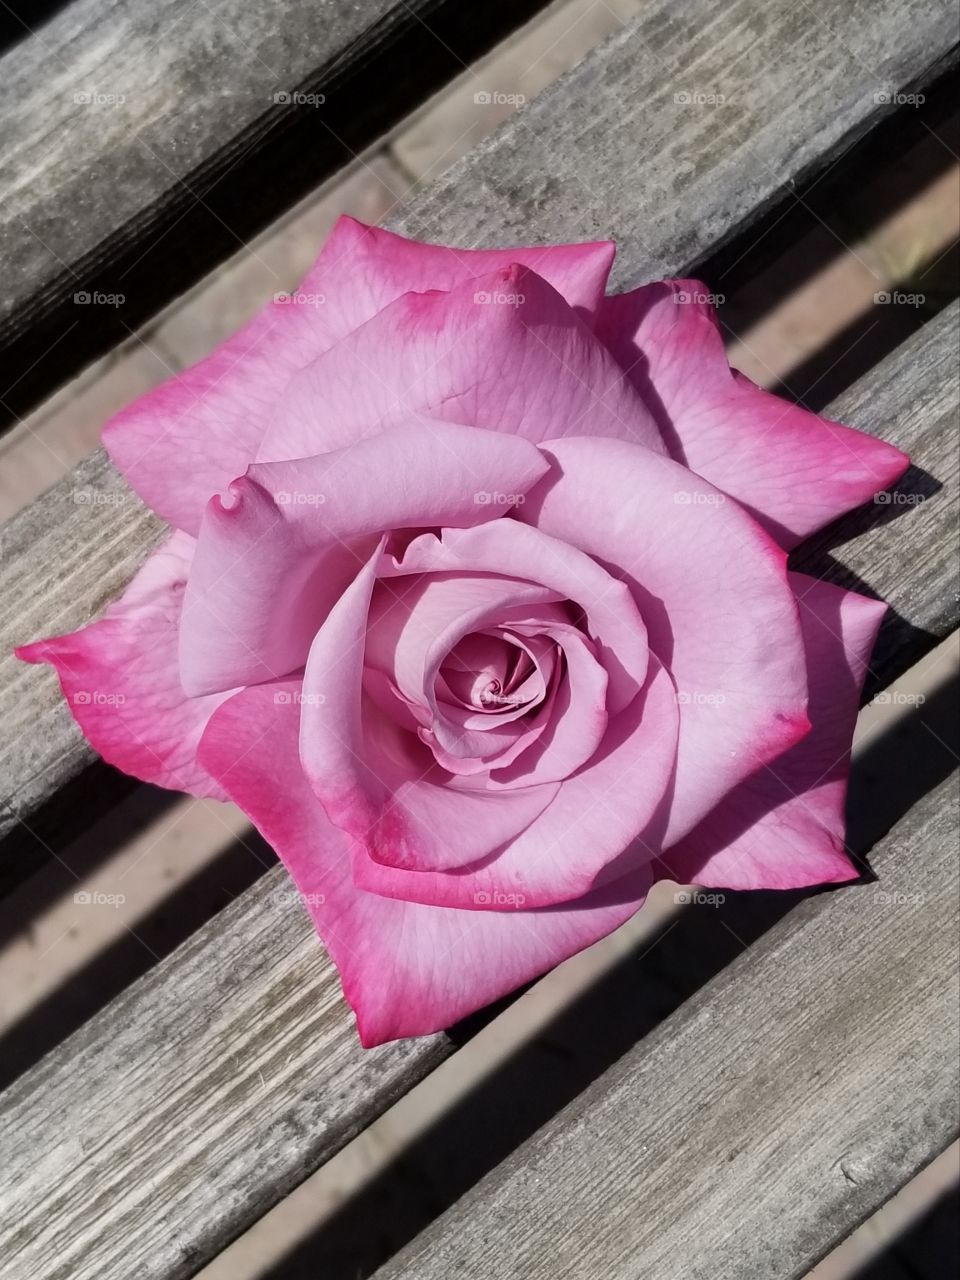 rose from backyard